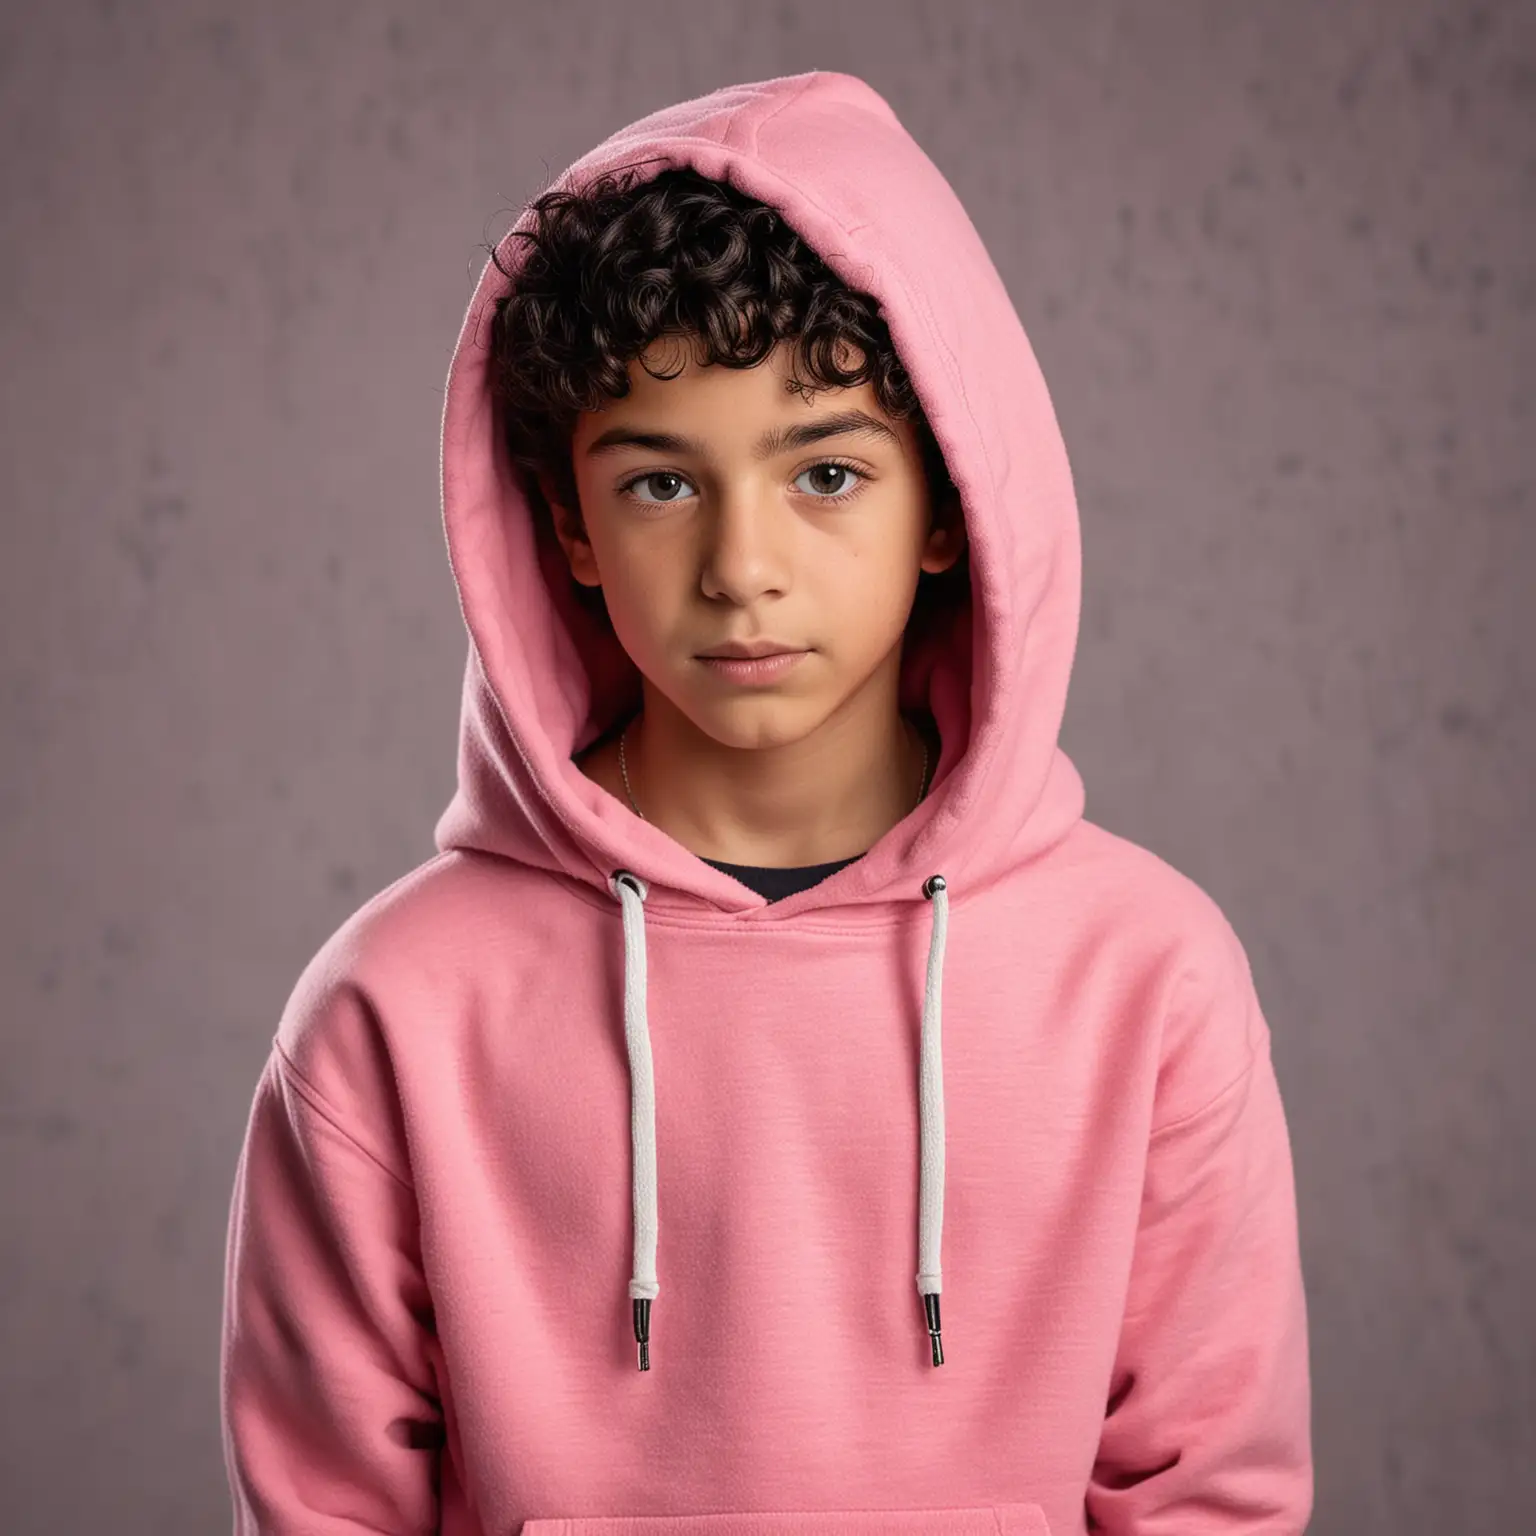 Portrait of a modern boy
Marokkaans
Curly short hair
Pink Hoodie
Black hair
age 10 looking straight into camera